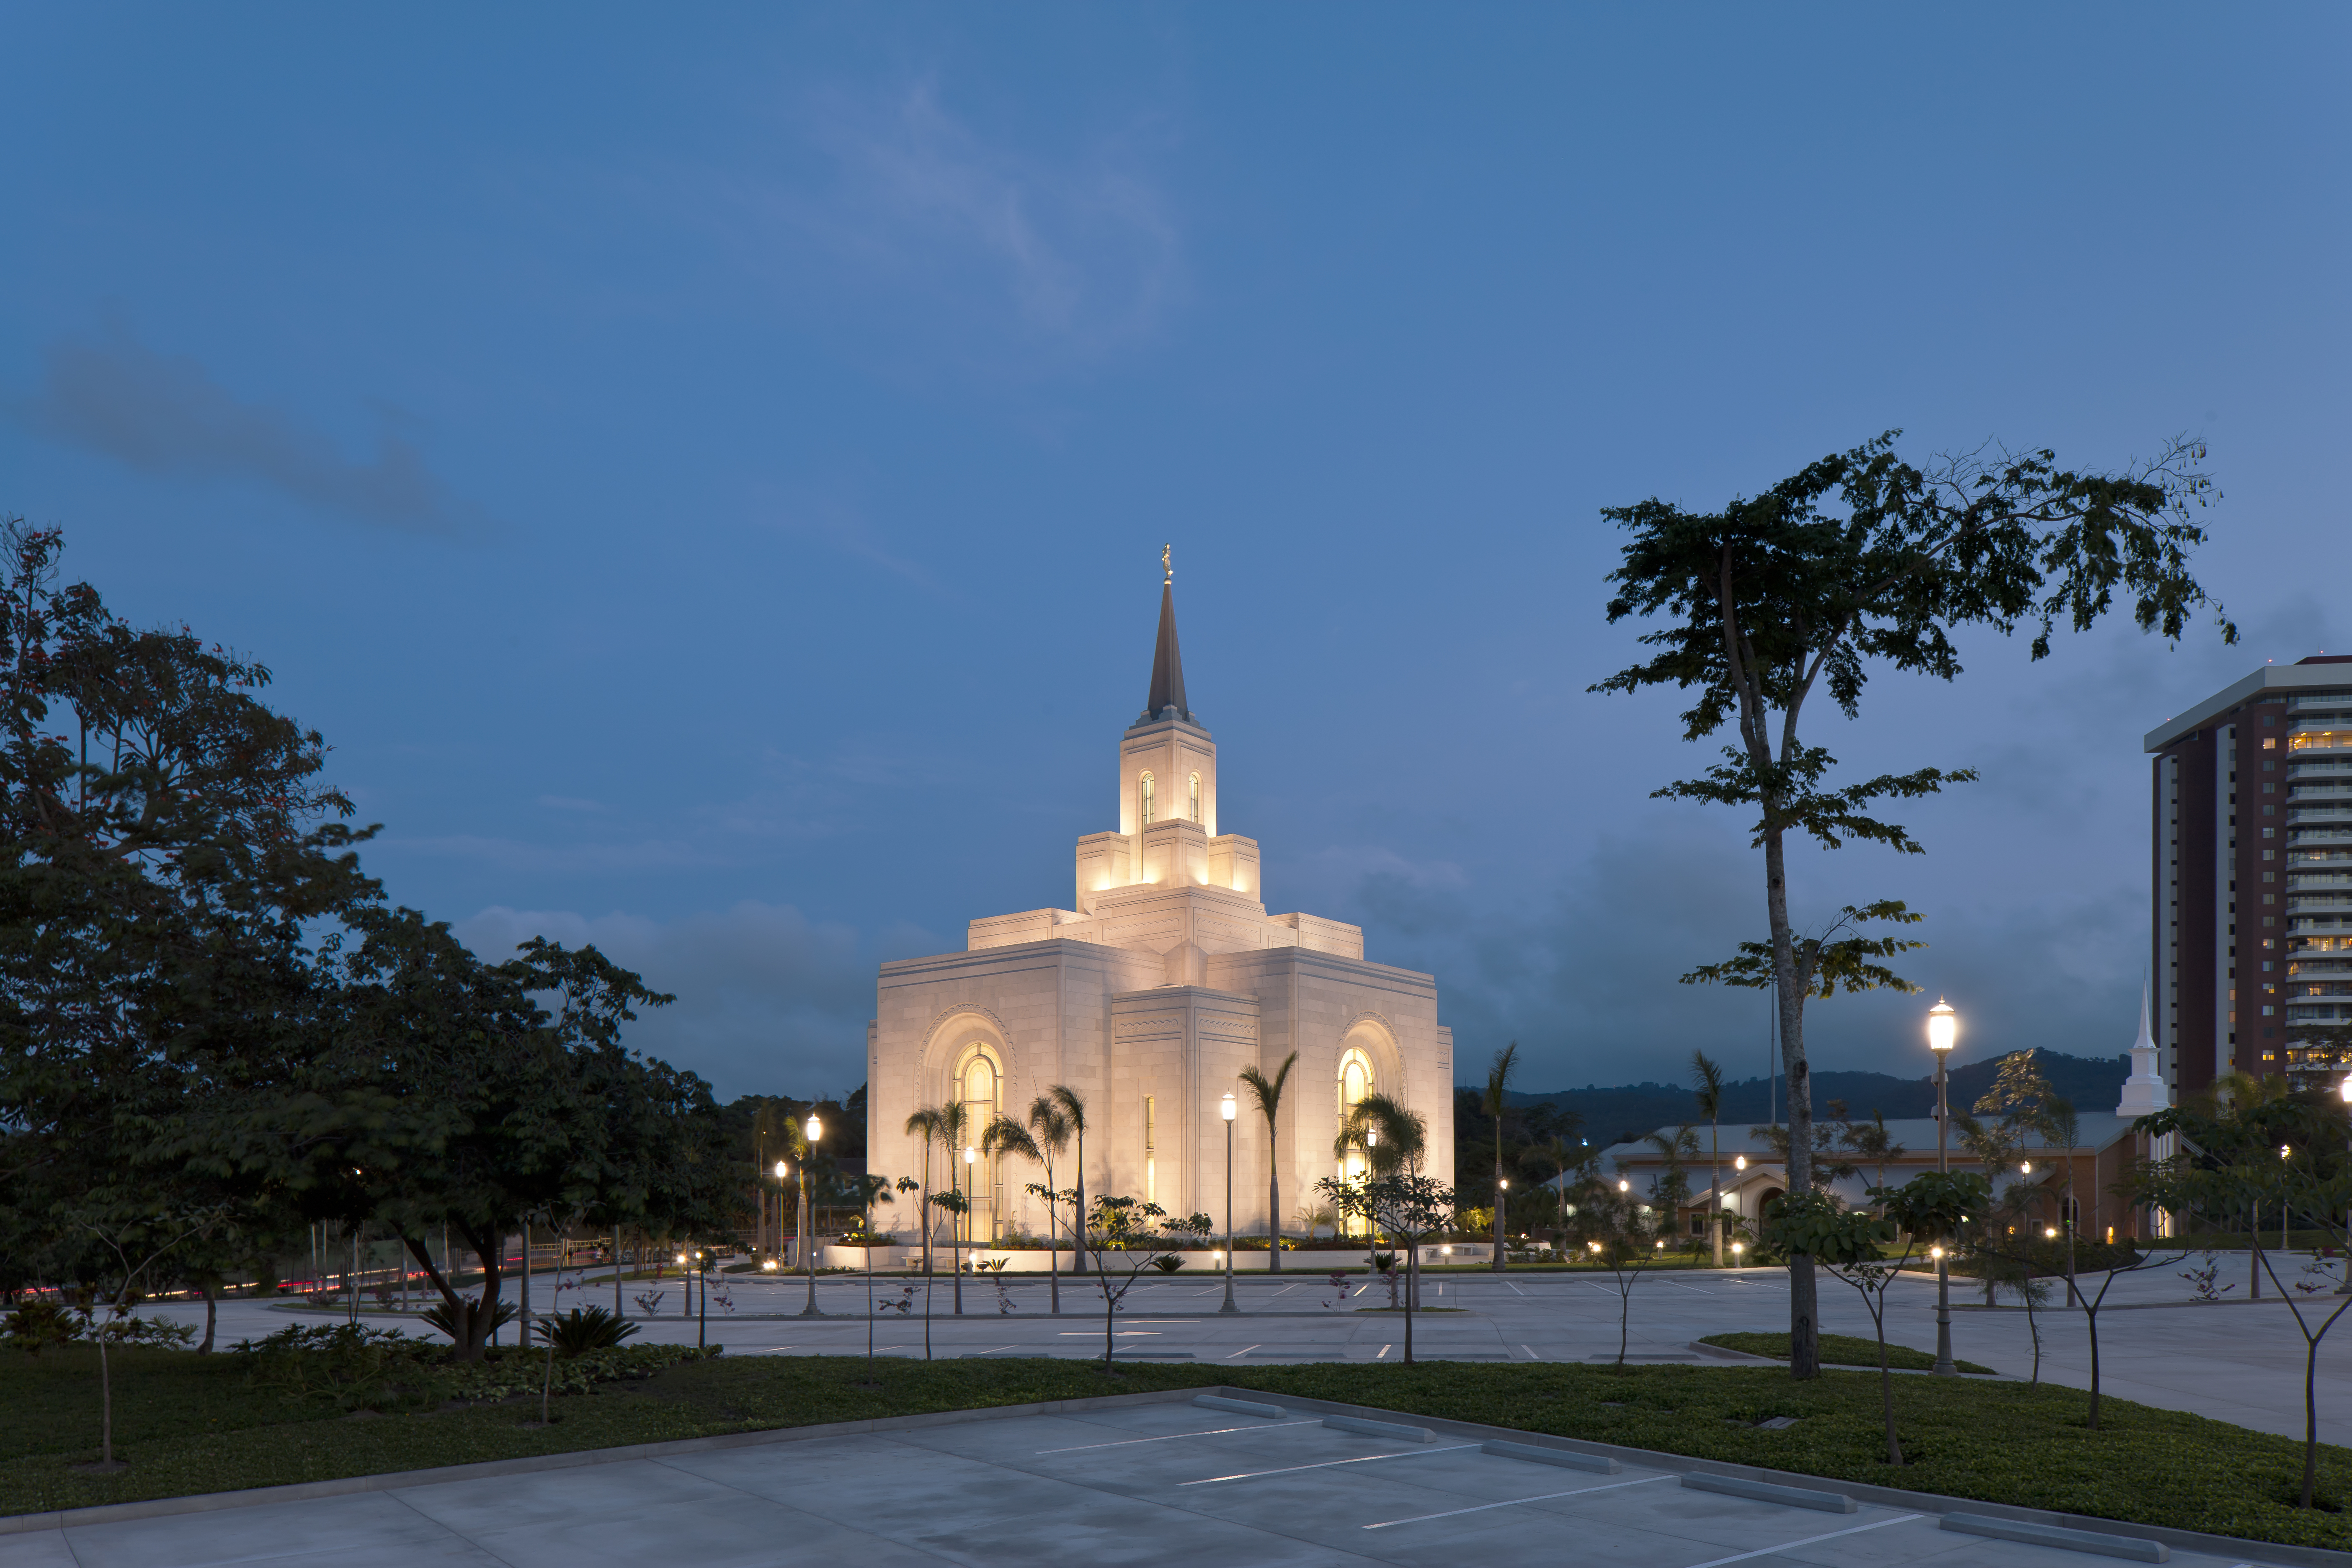 Public Invited to Attend San Salvador El Salvador Temple Open House